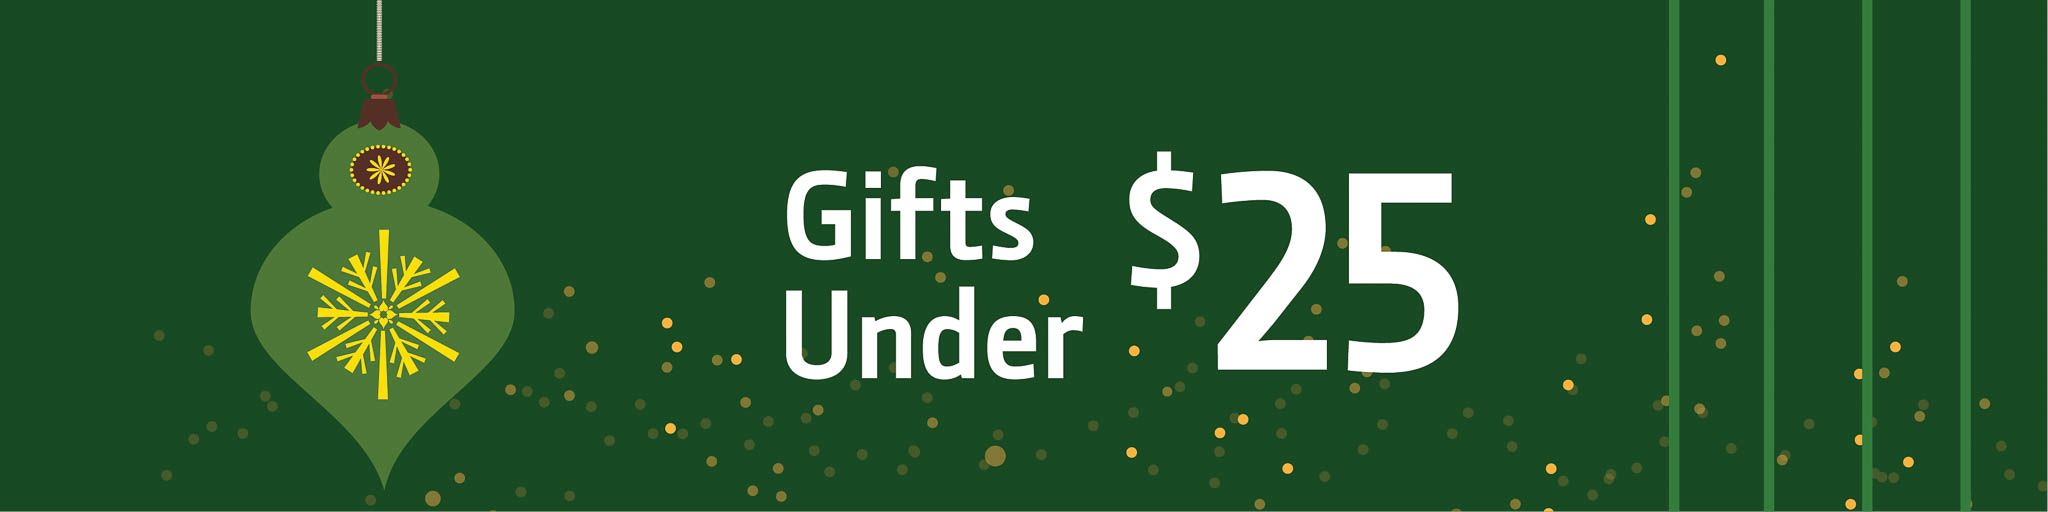 John Deere Gifts Under $25